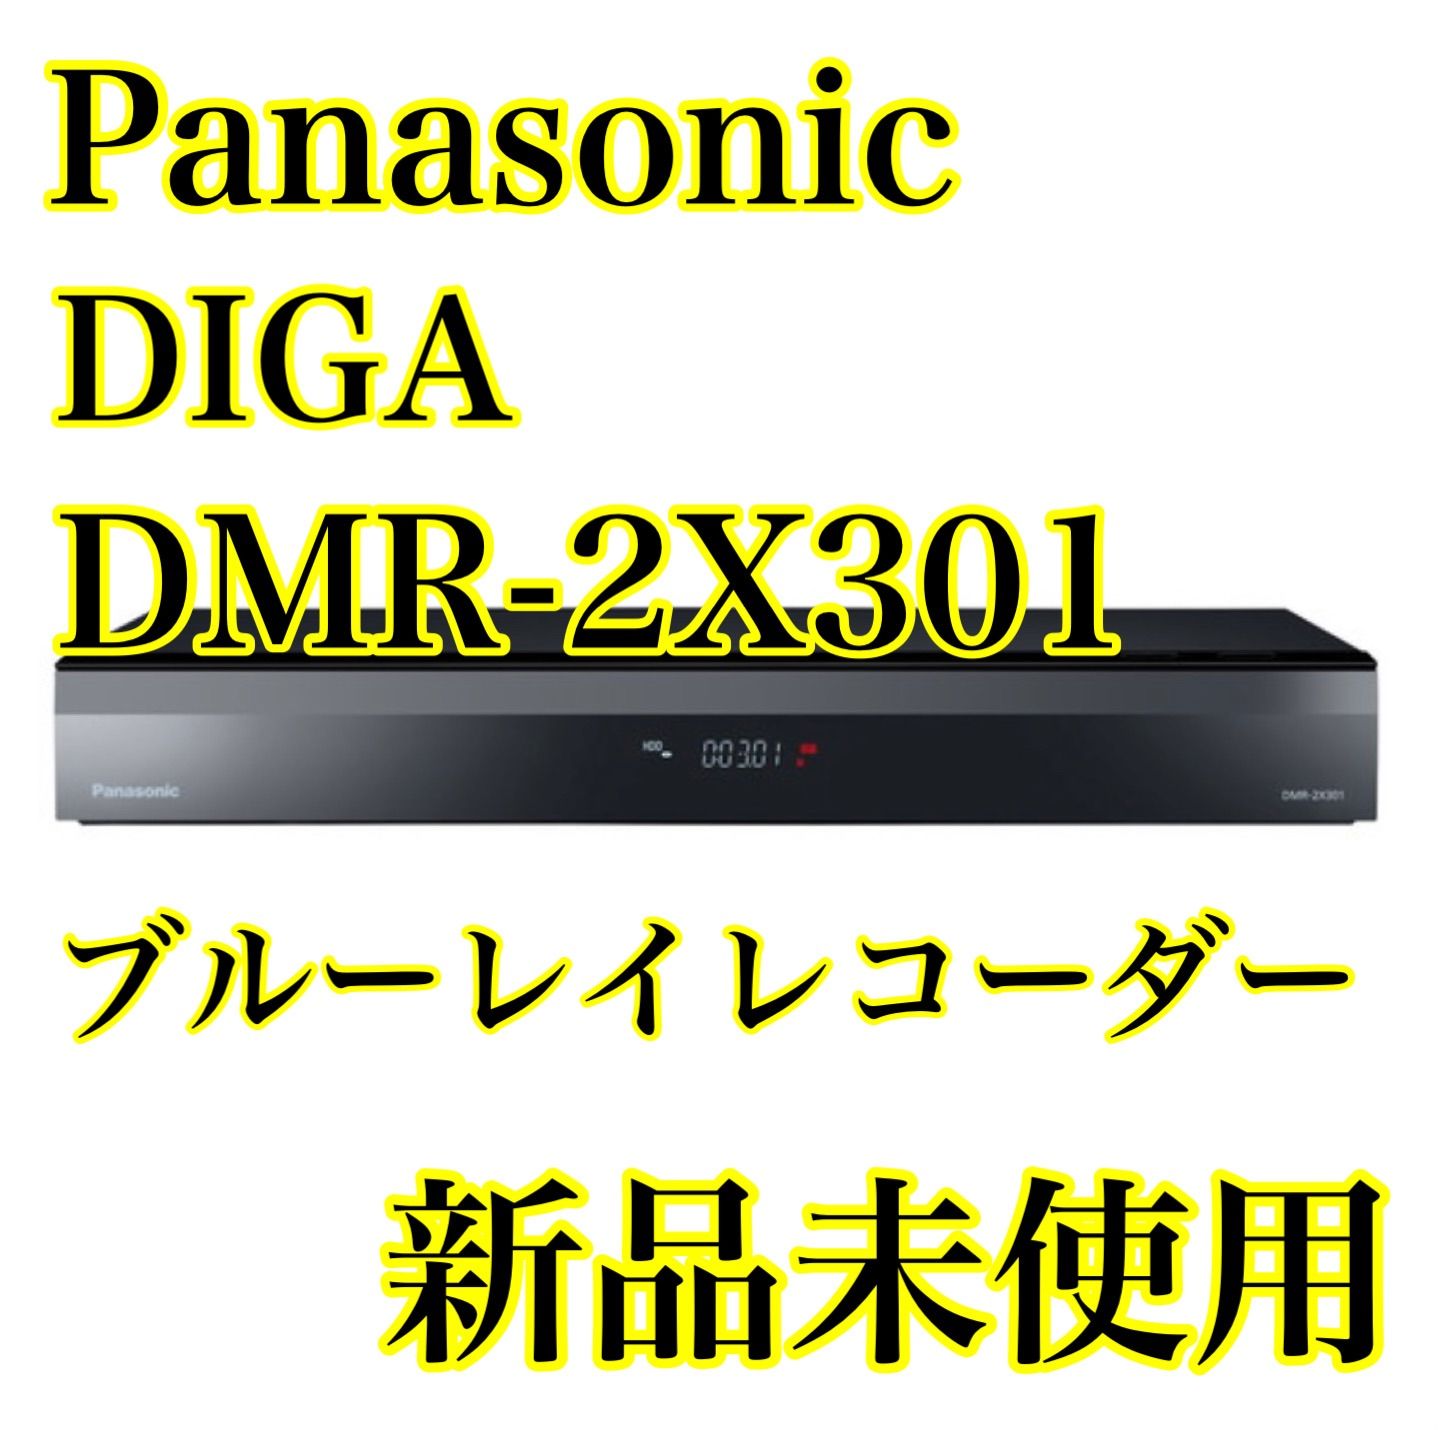 DMR-2X301 パナソニック DIGA